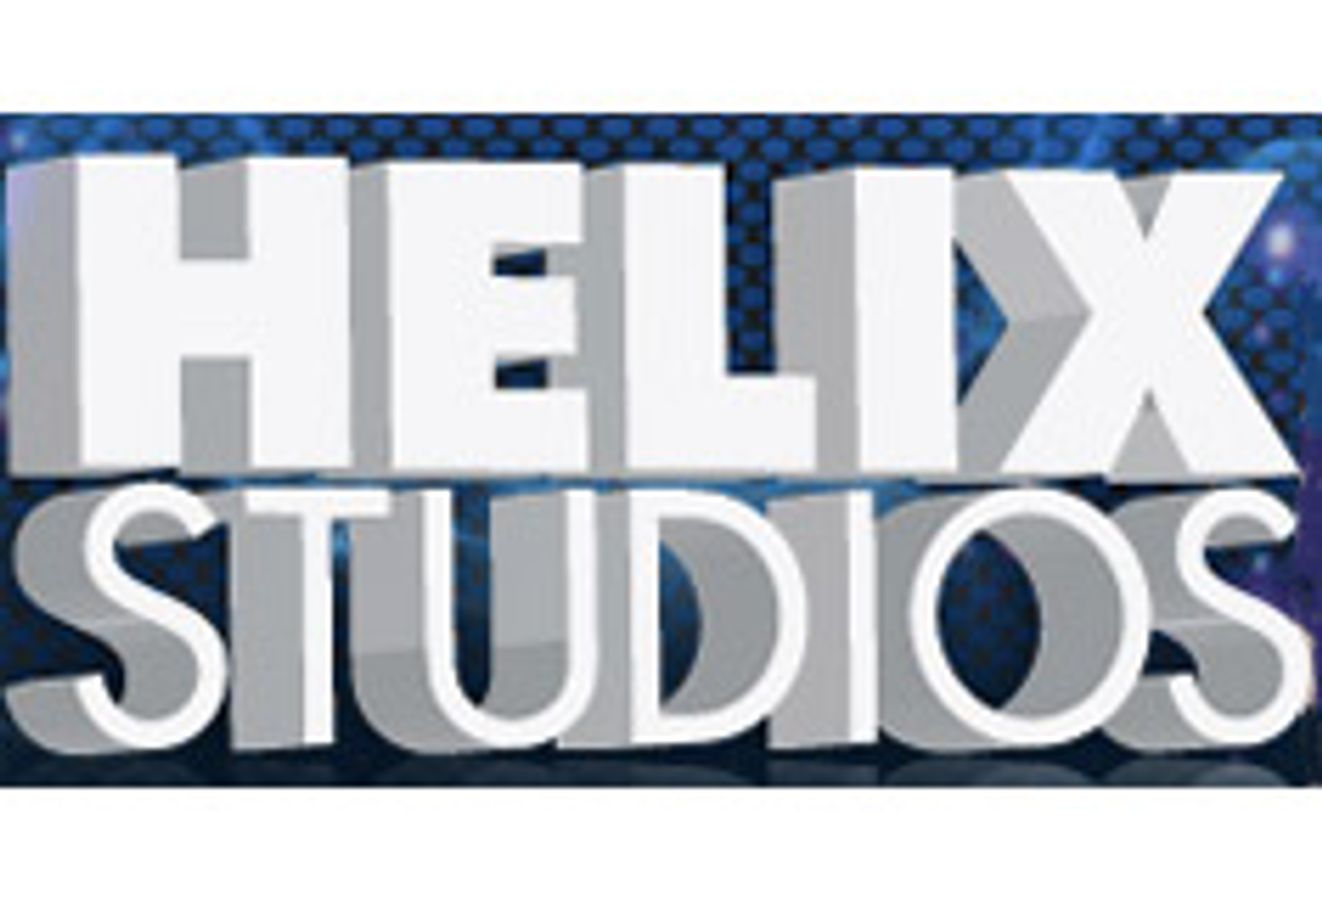 Helix Studios